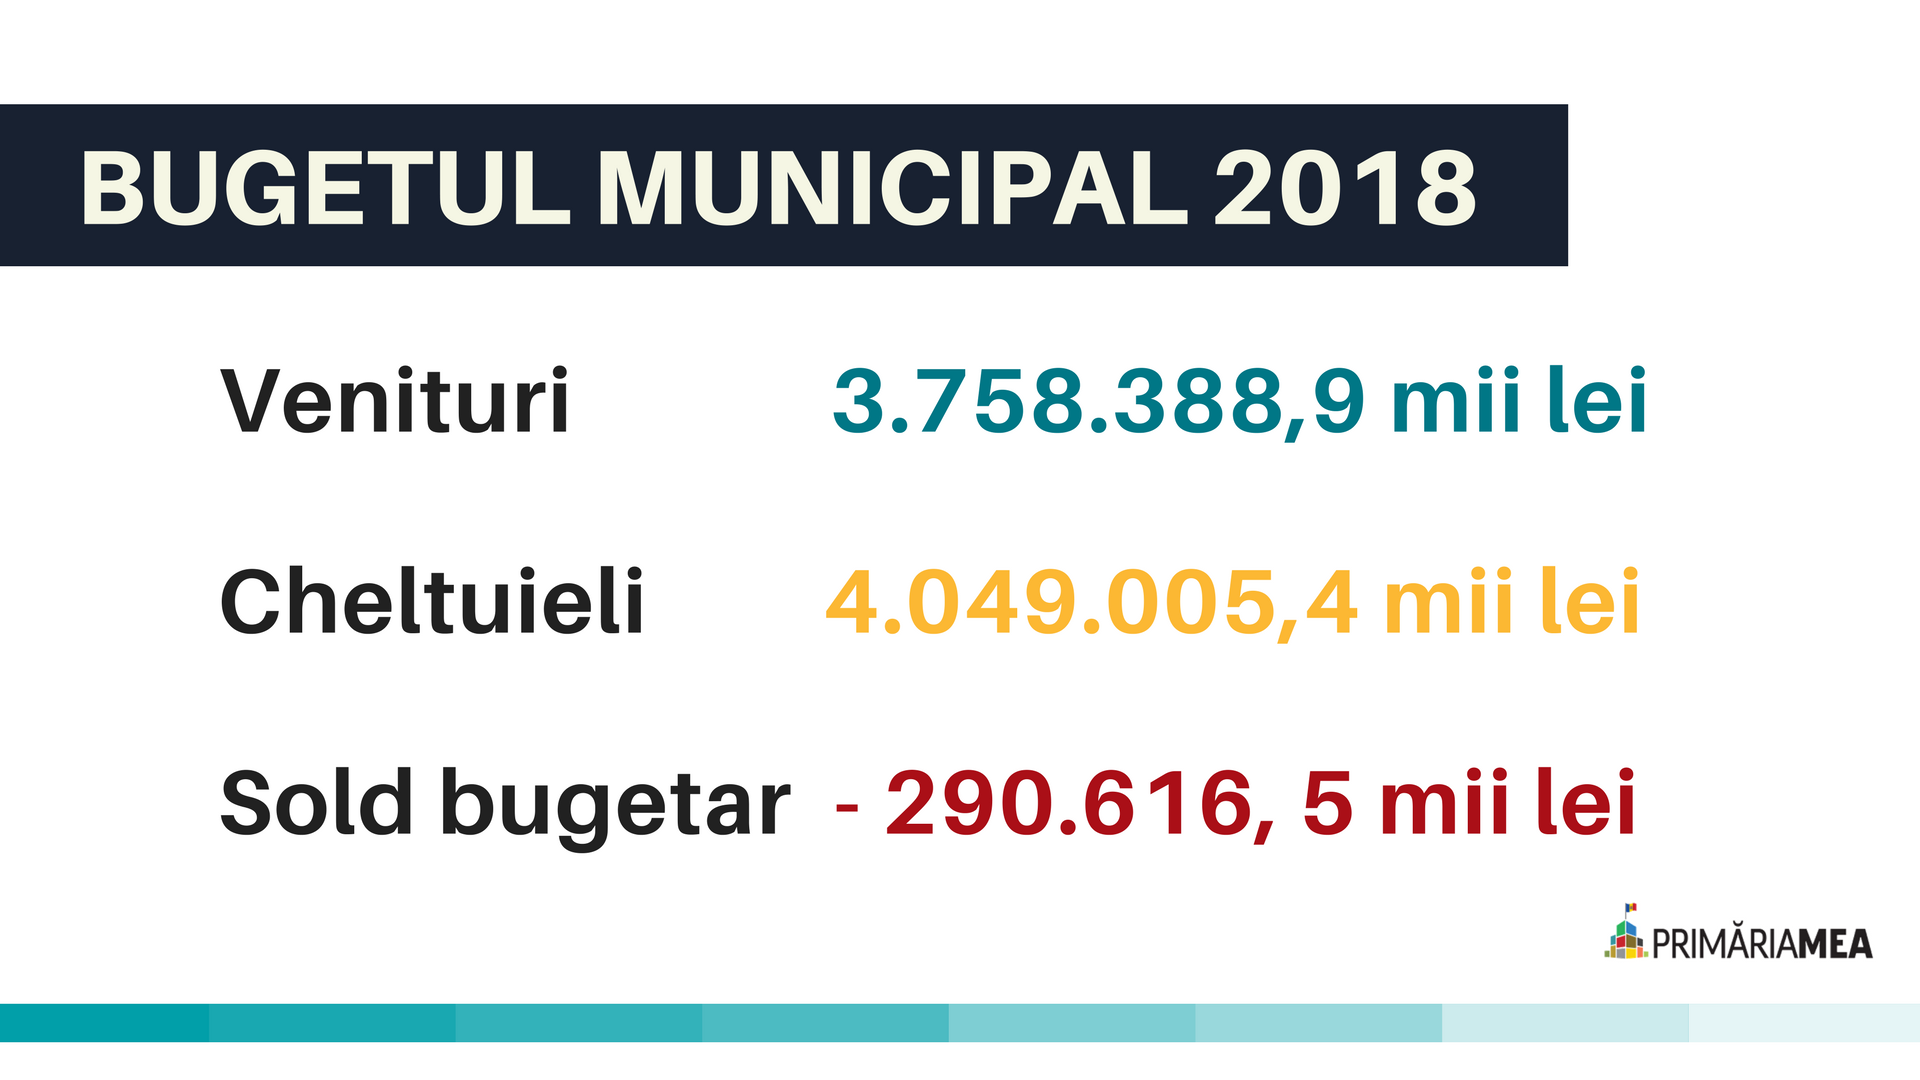 Buget municipal 2018